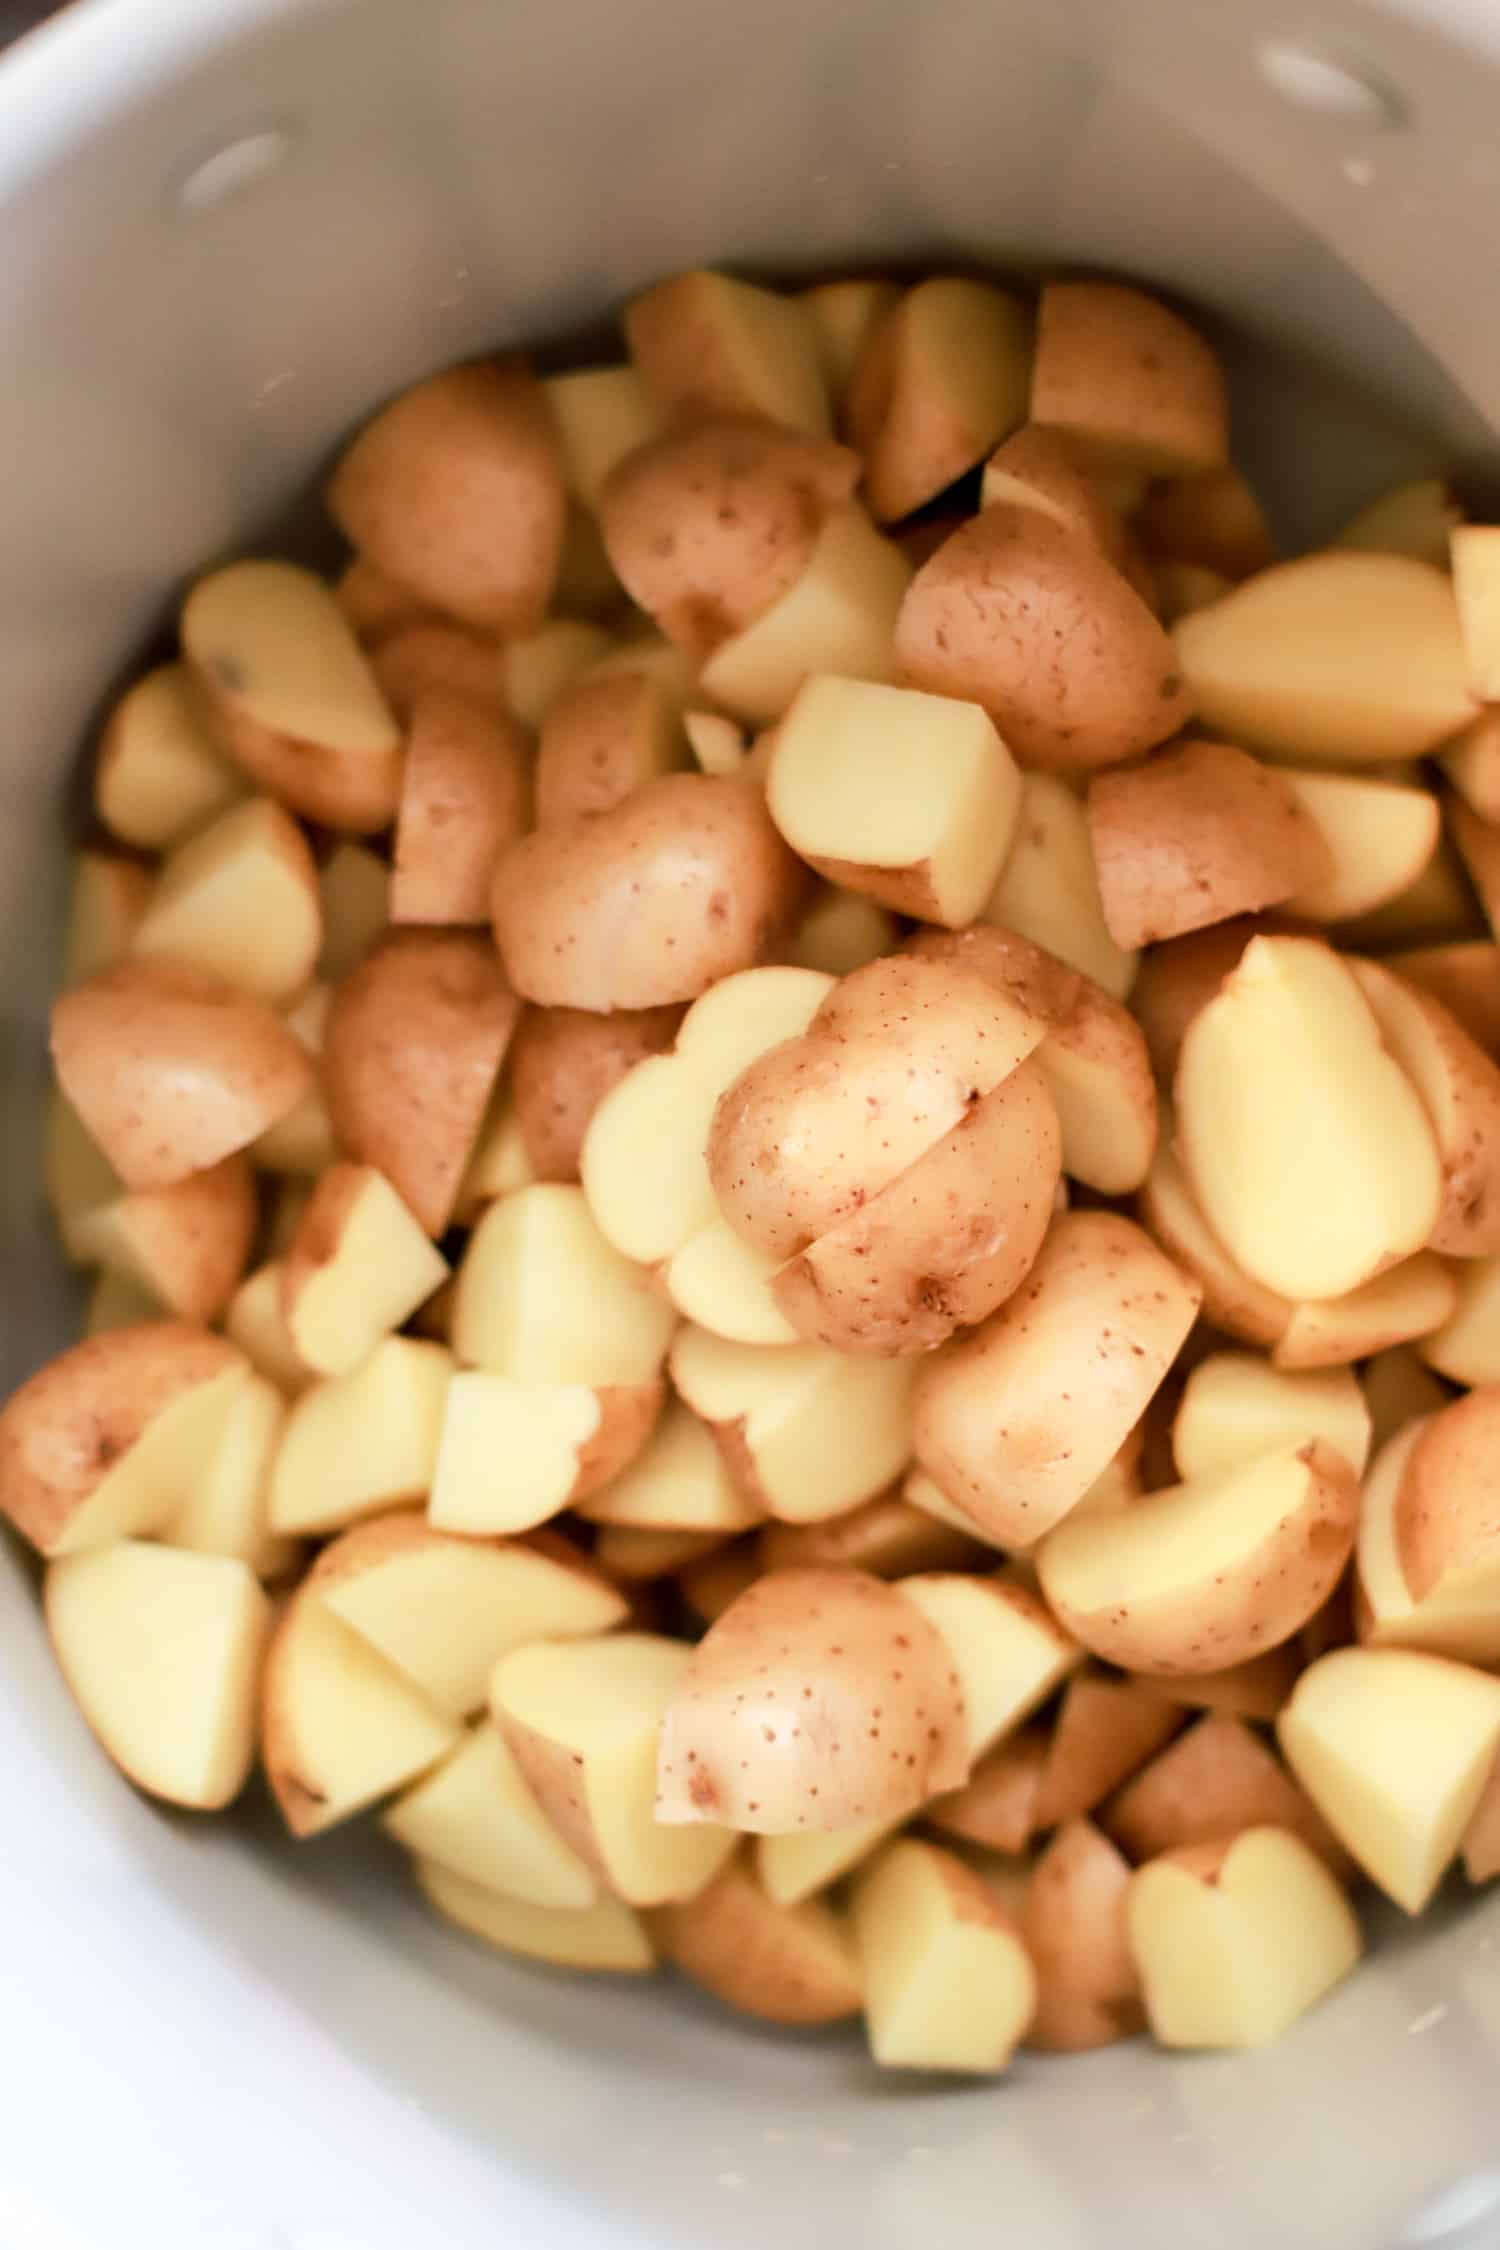 raw cut potatoes in a pot